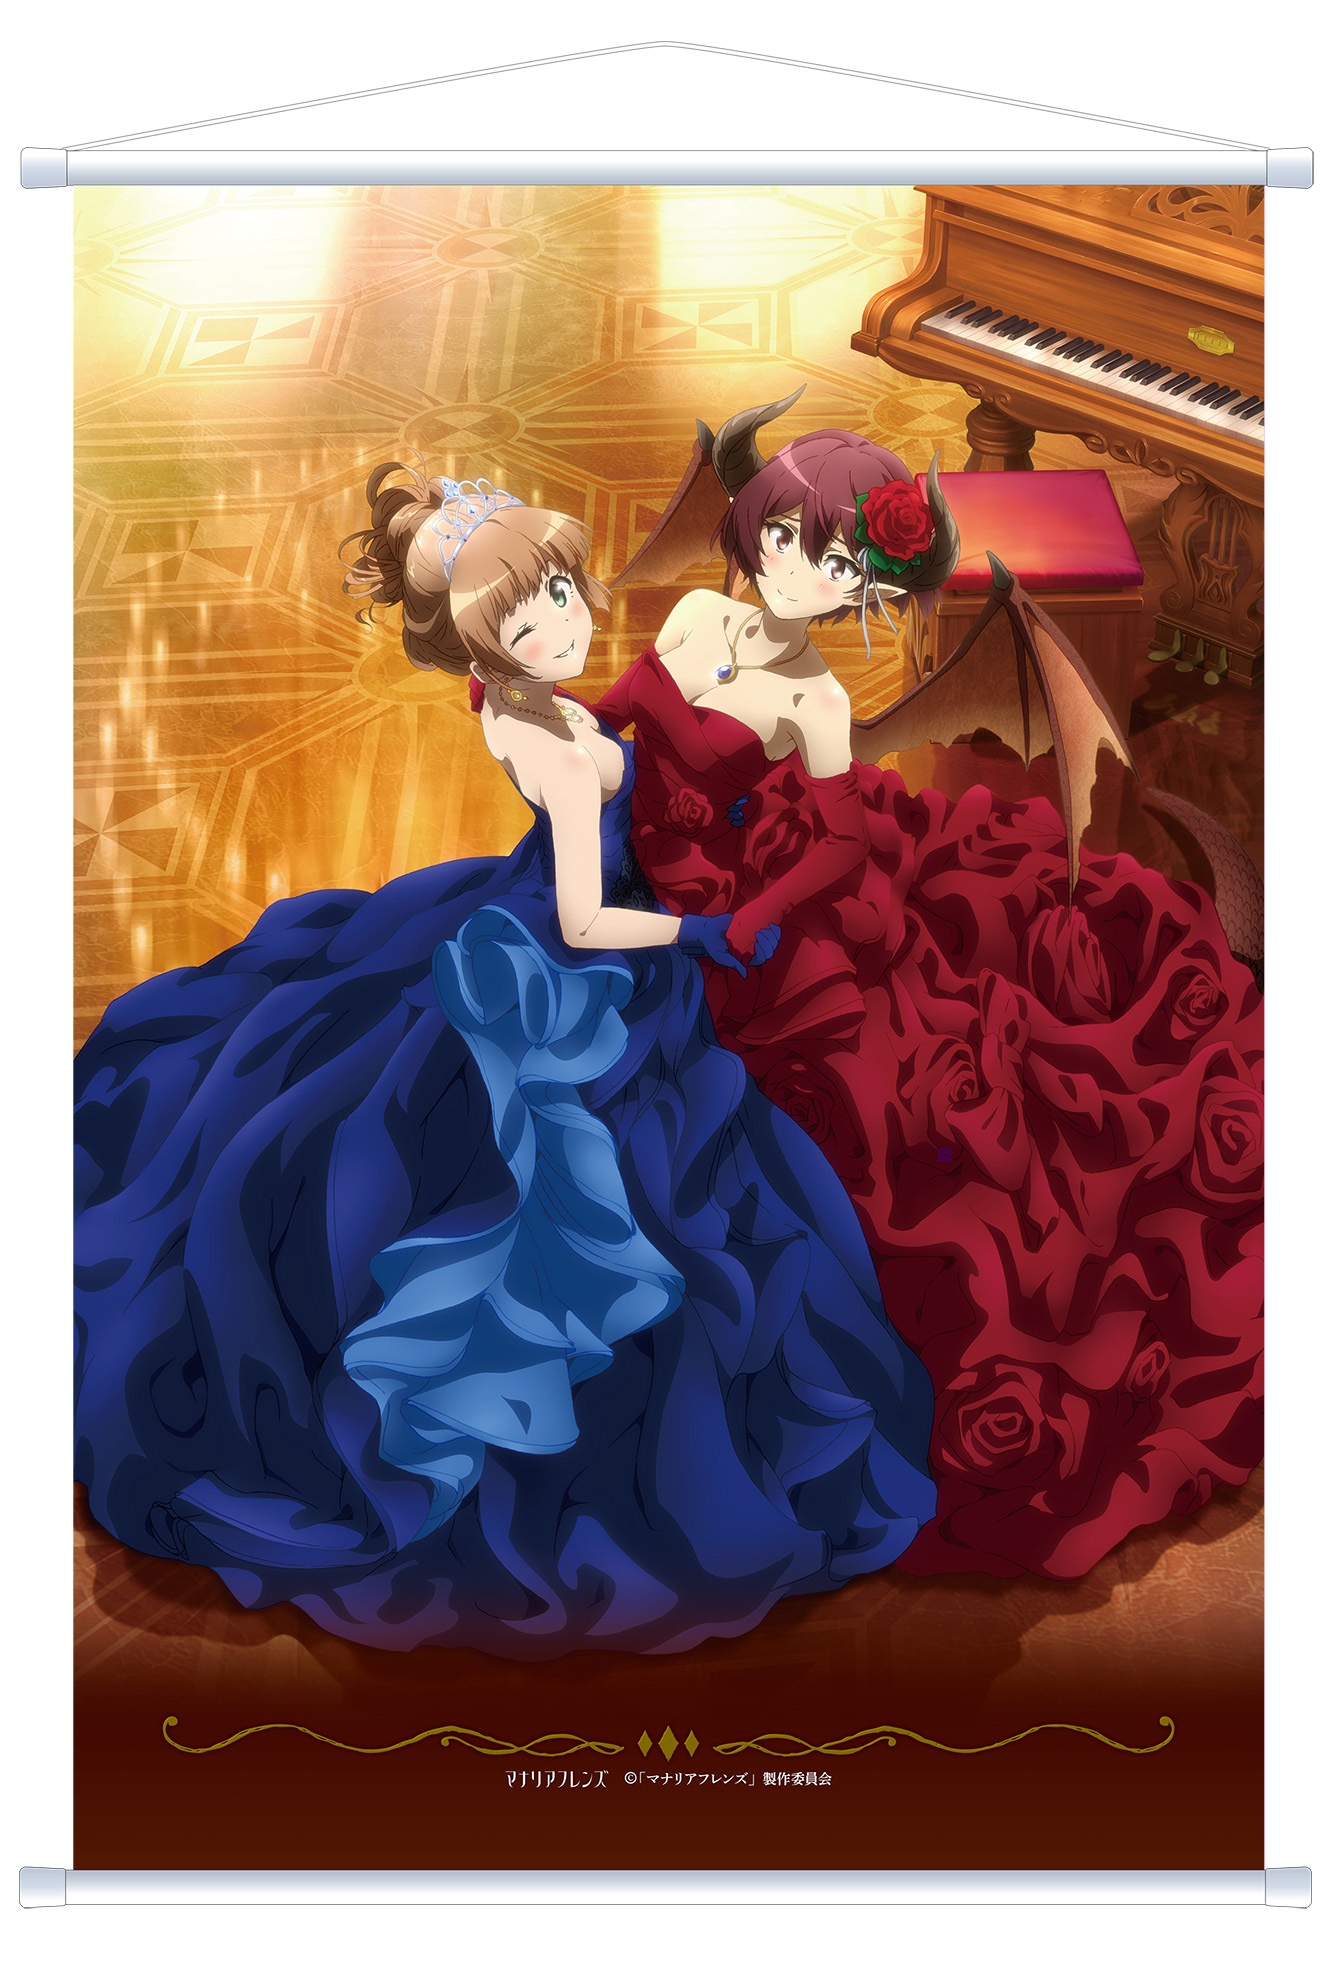 Manaria Friends (Anime Ver.): Tapestry